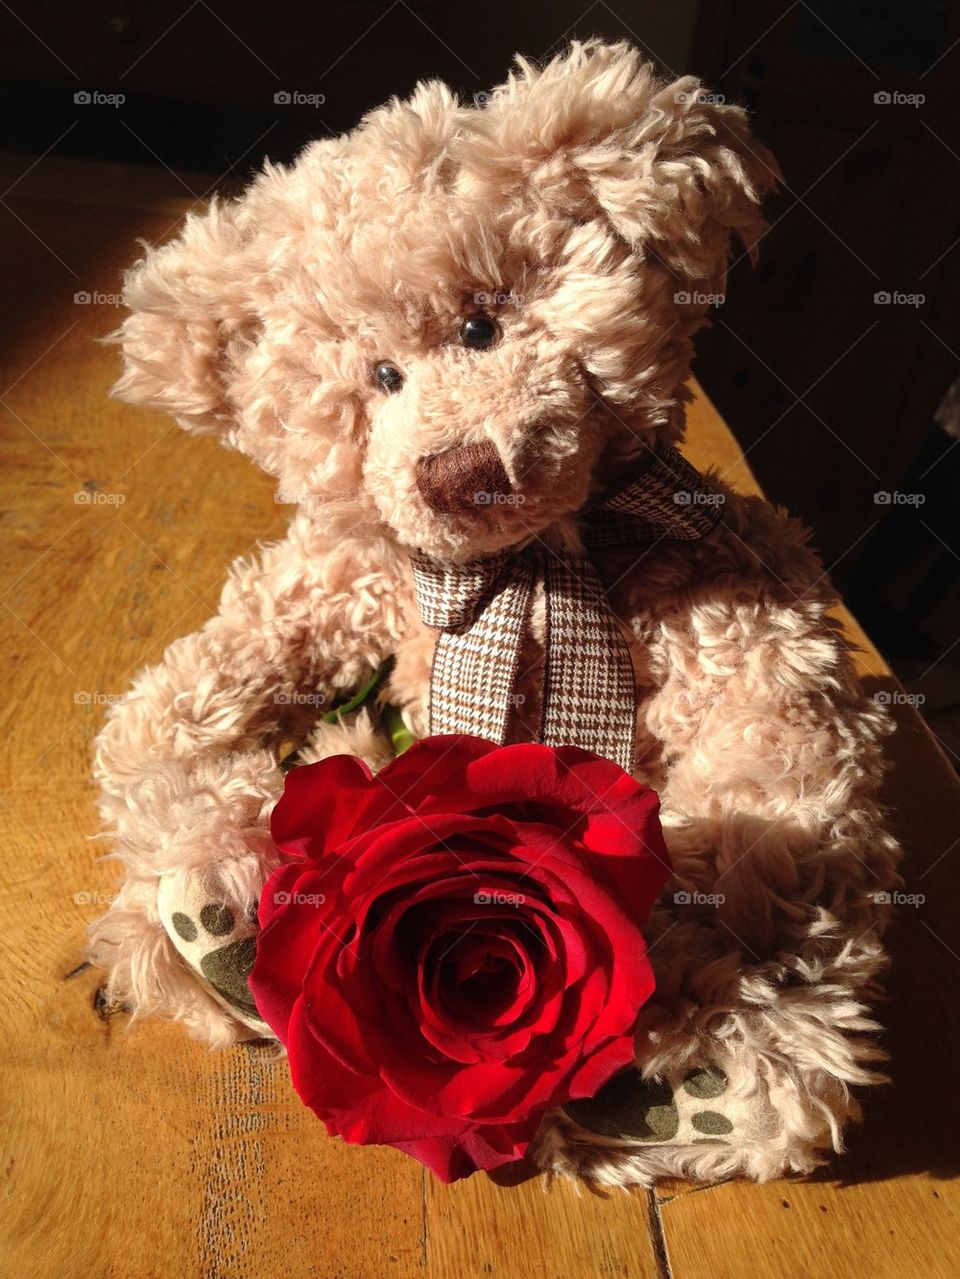 Romantic teddy bear!